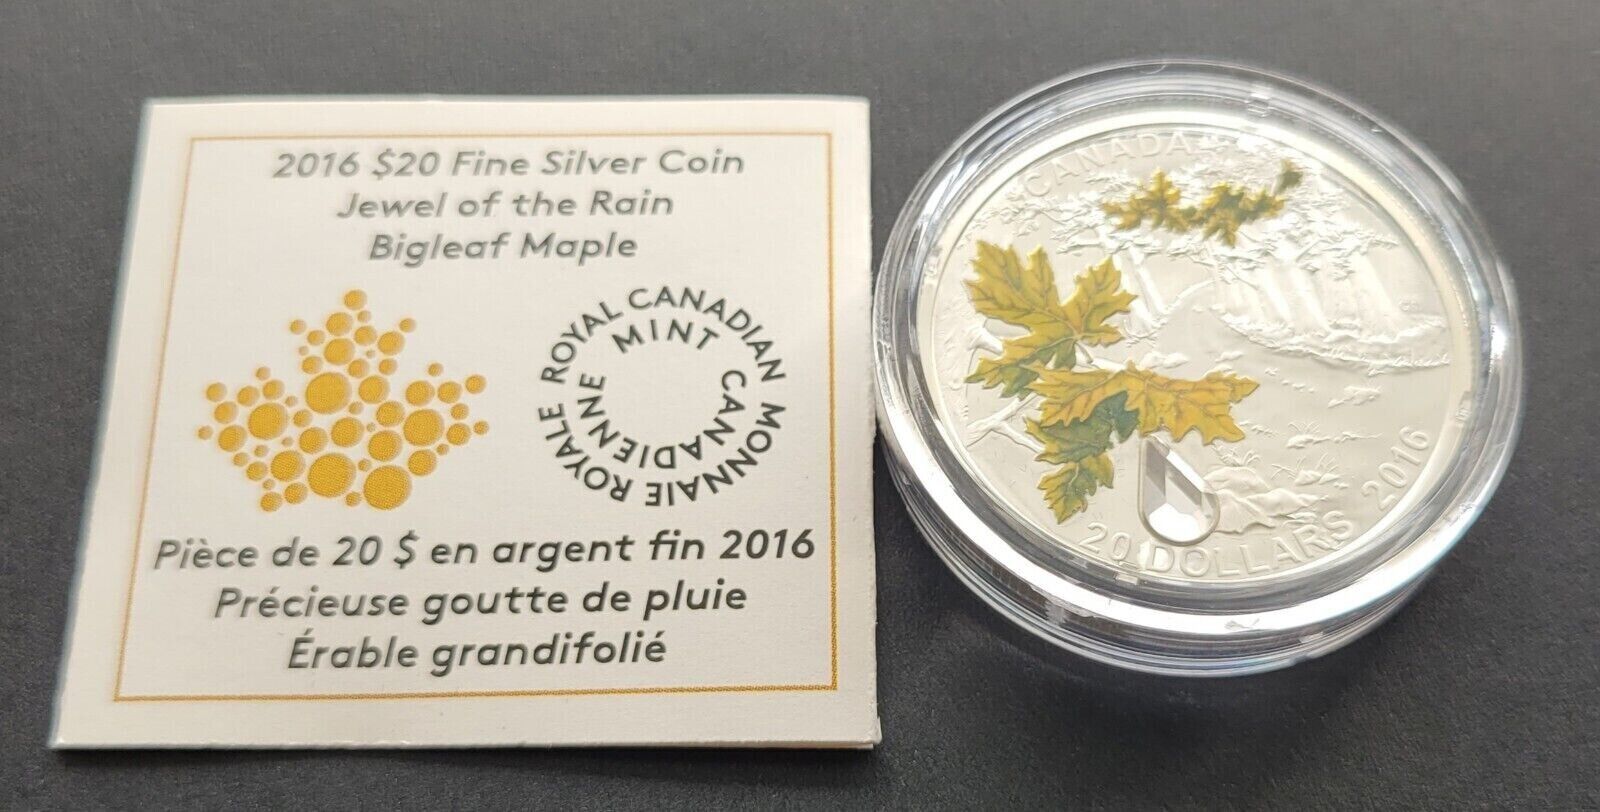 1 Oz Silver Coin 2016 $20 Canada Jewel of the Rain Bigleaf Maple Swarovski Drop-classypw.com-4